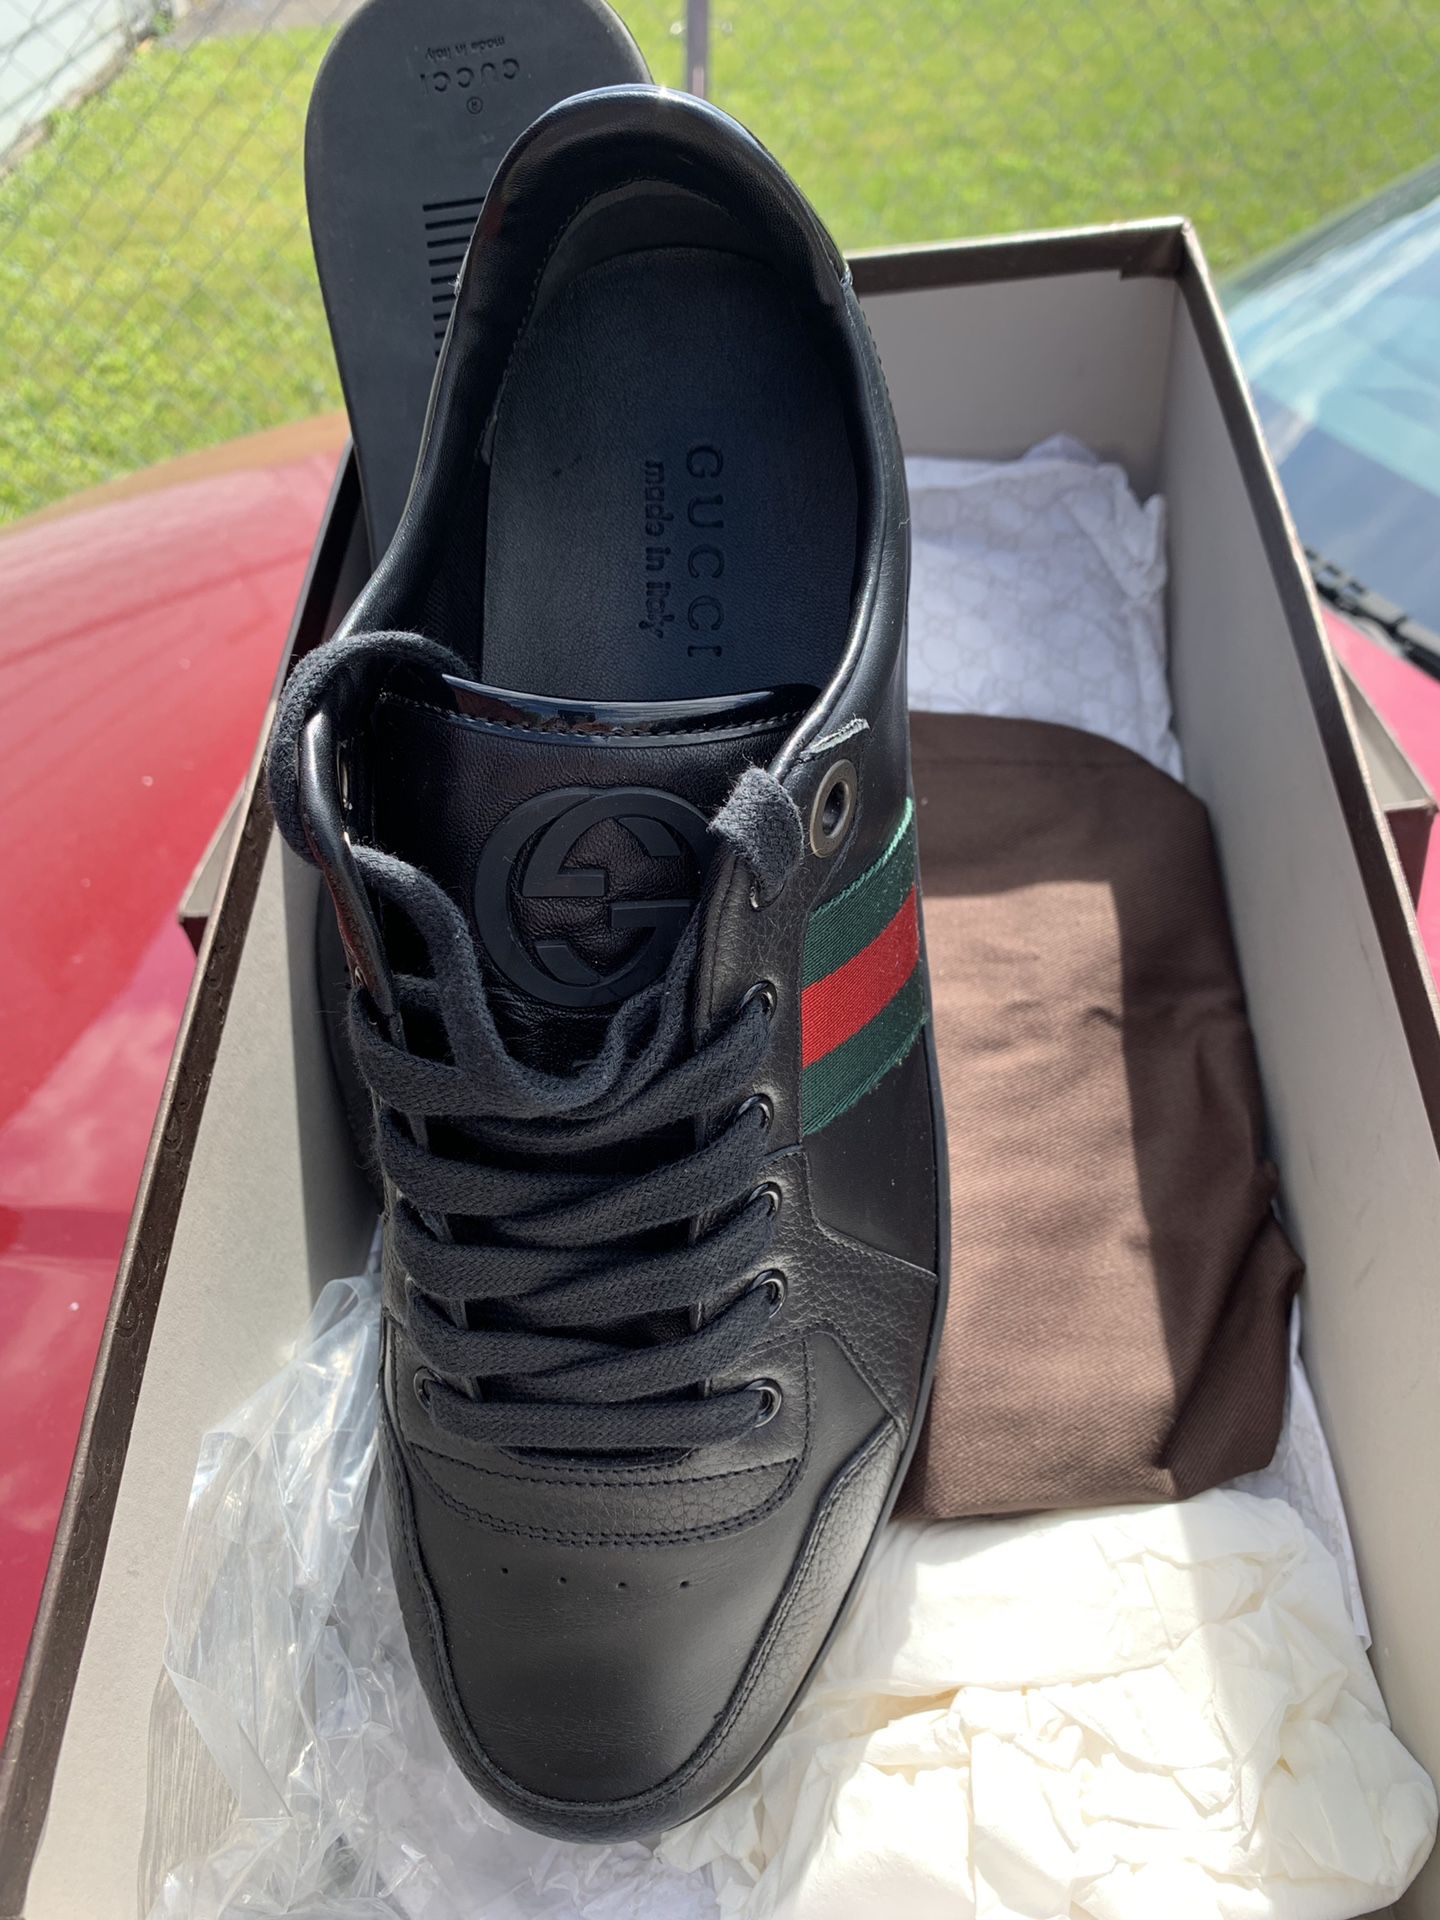 Gucci Black leather tennis shoes size 10 1/2